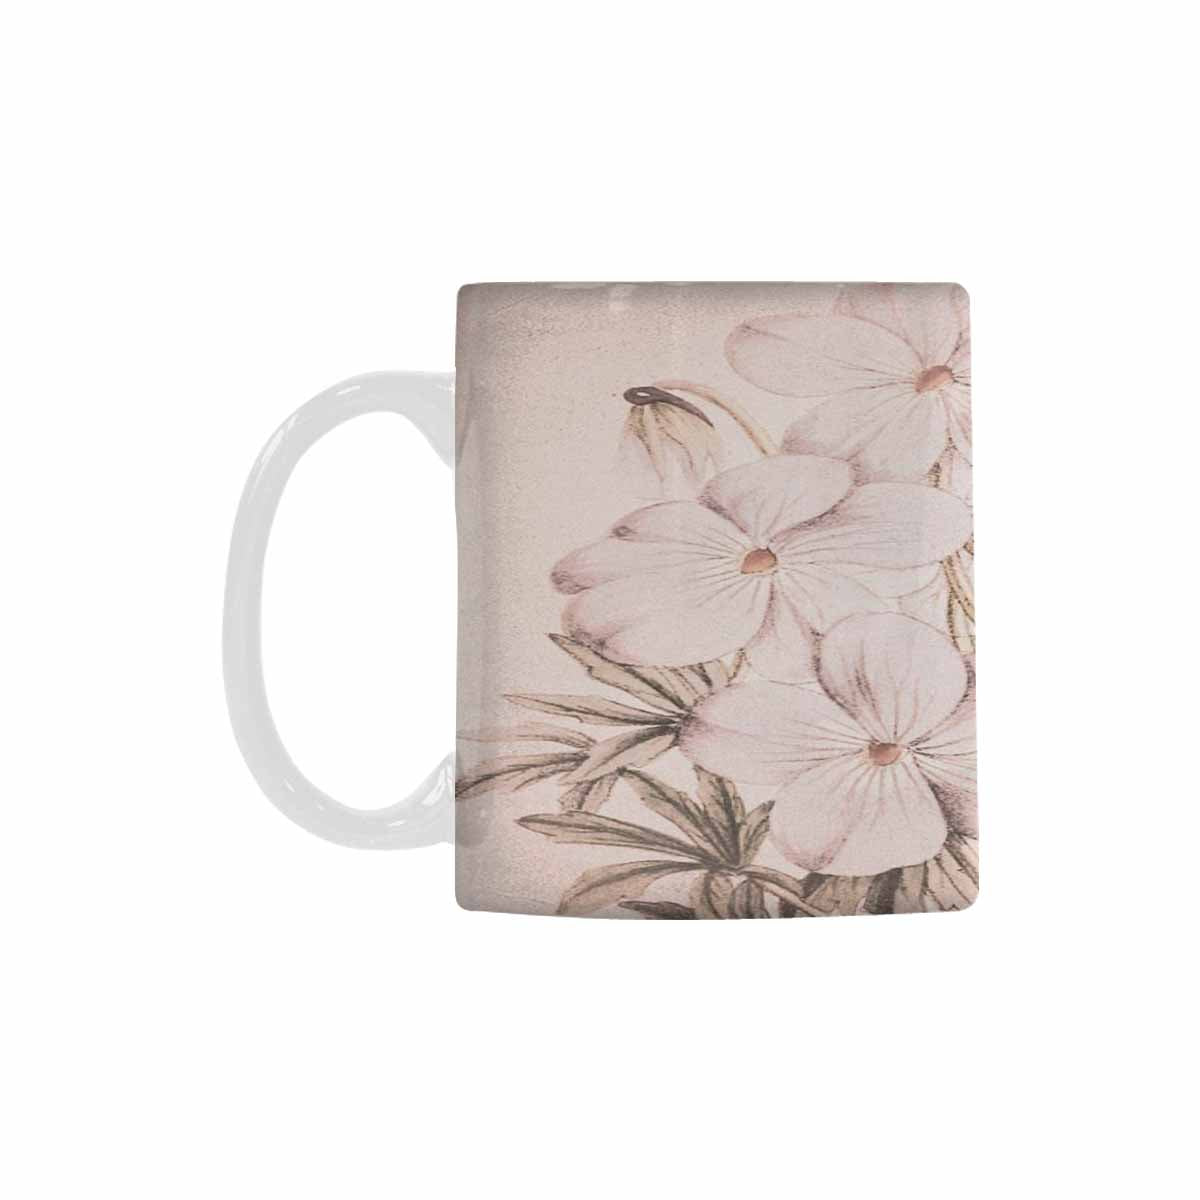 Vintage floral coffee mug or tea cup, Design 13x